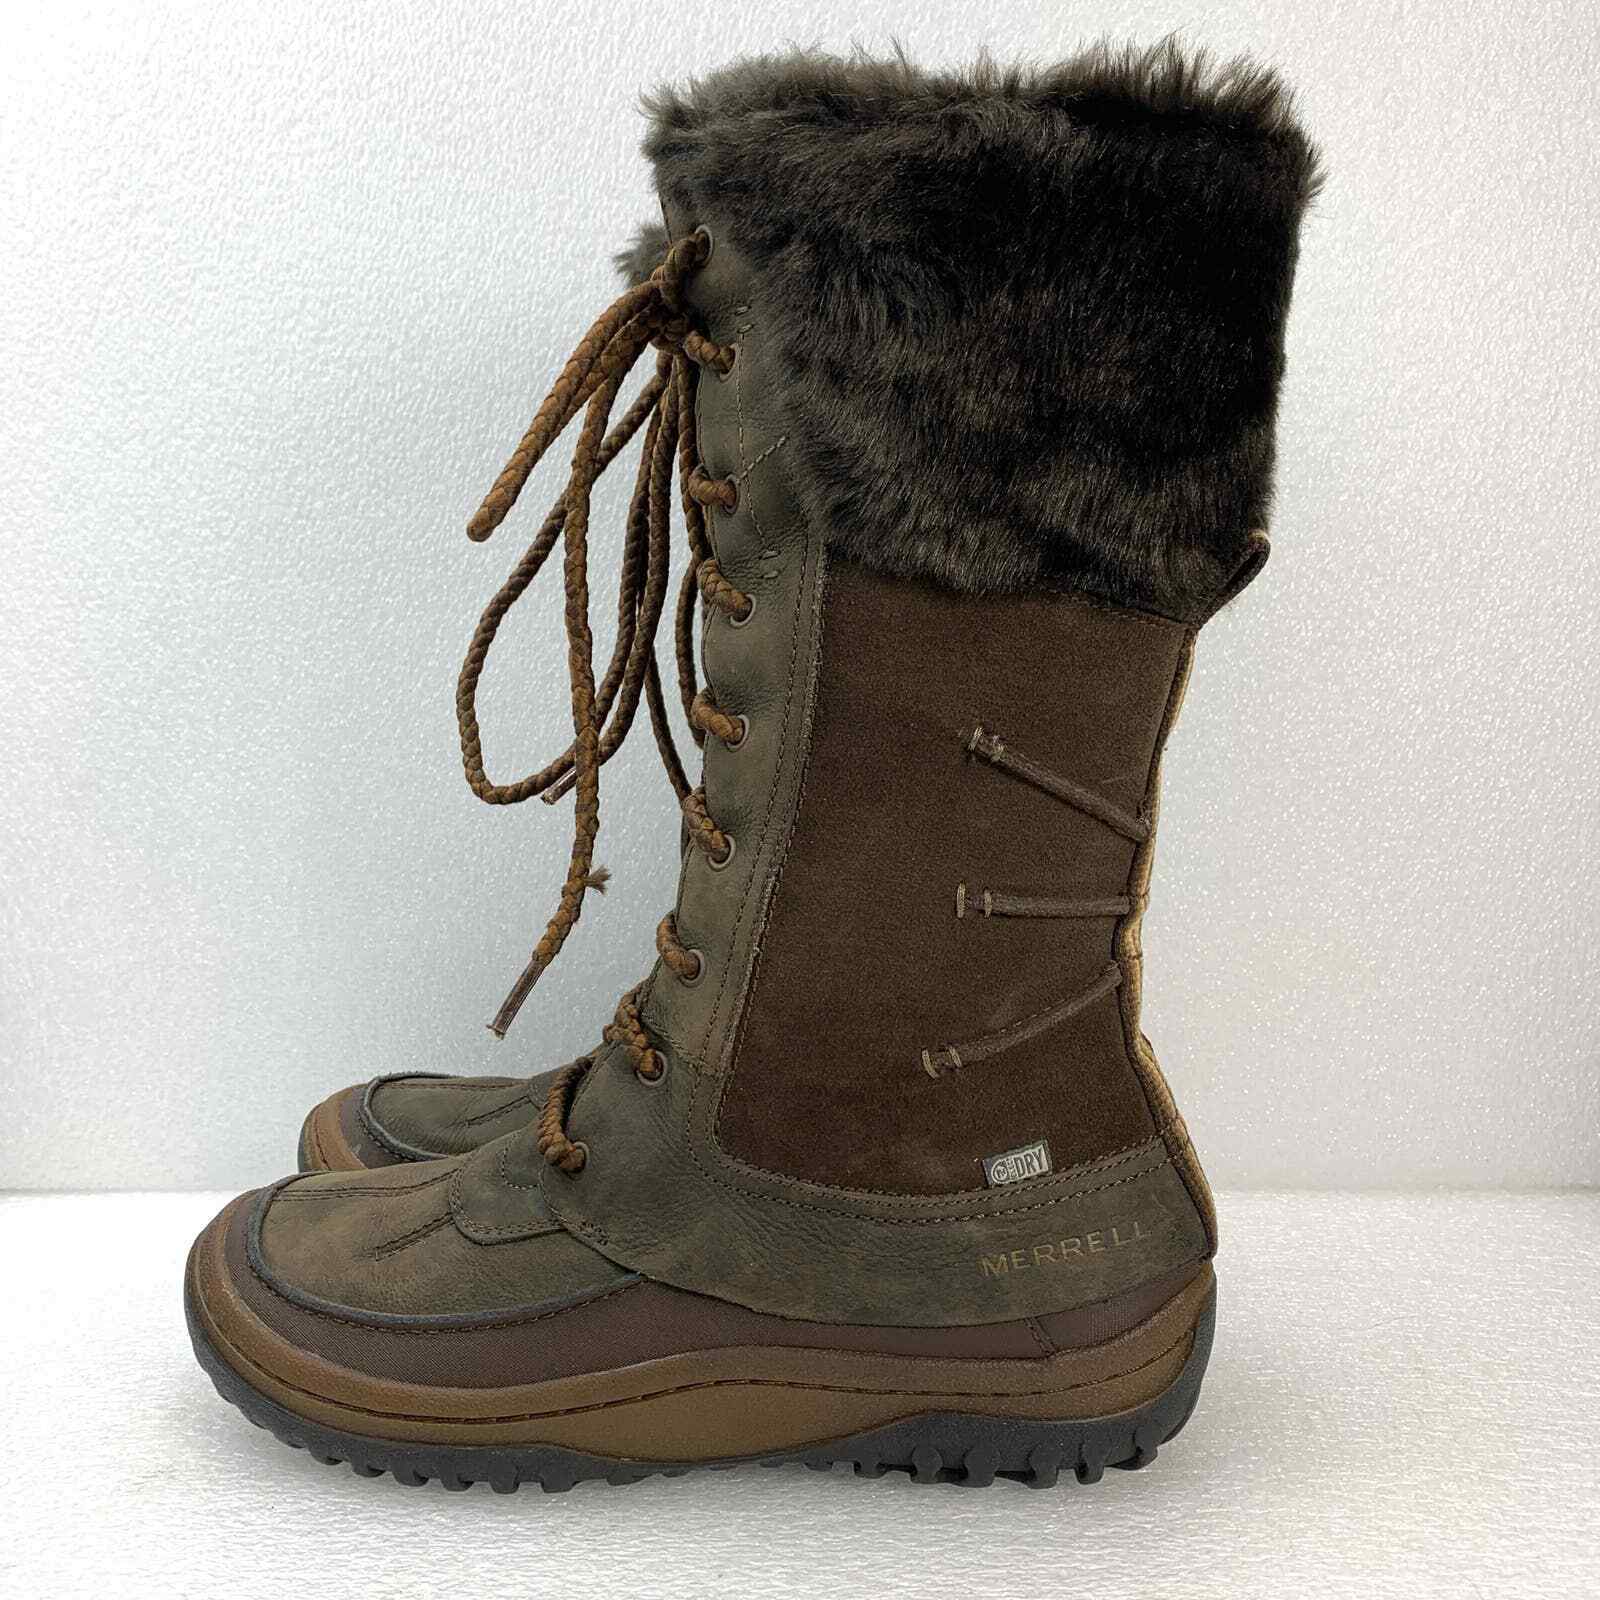 Merrell Dry Warm Insulation Boots - Women's 7.5 - image 4